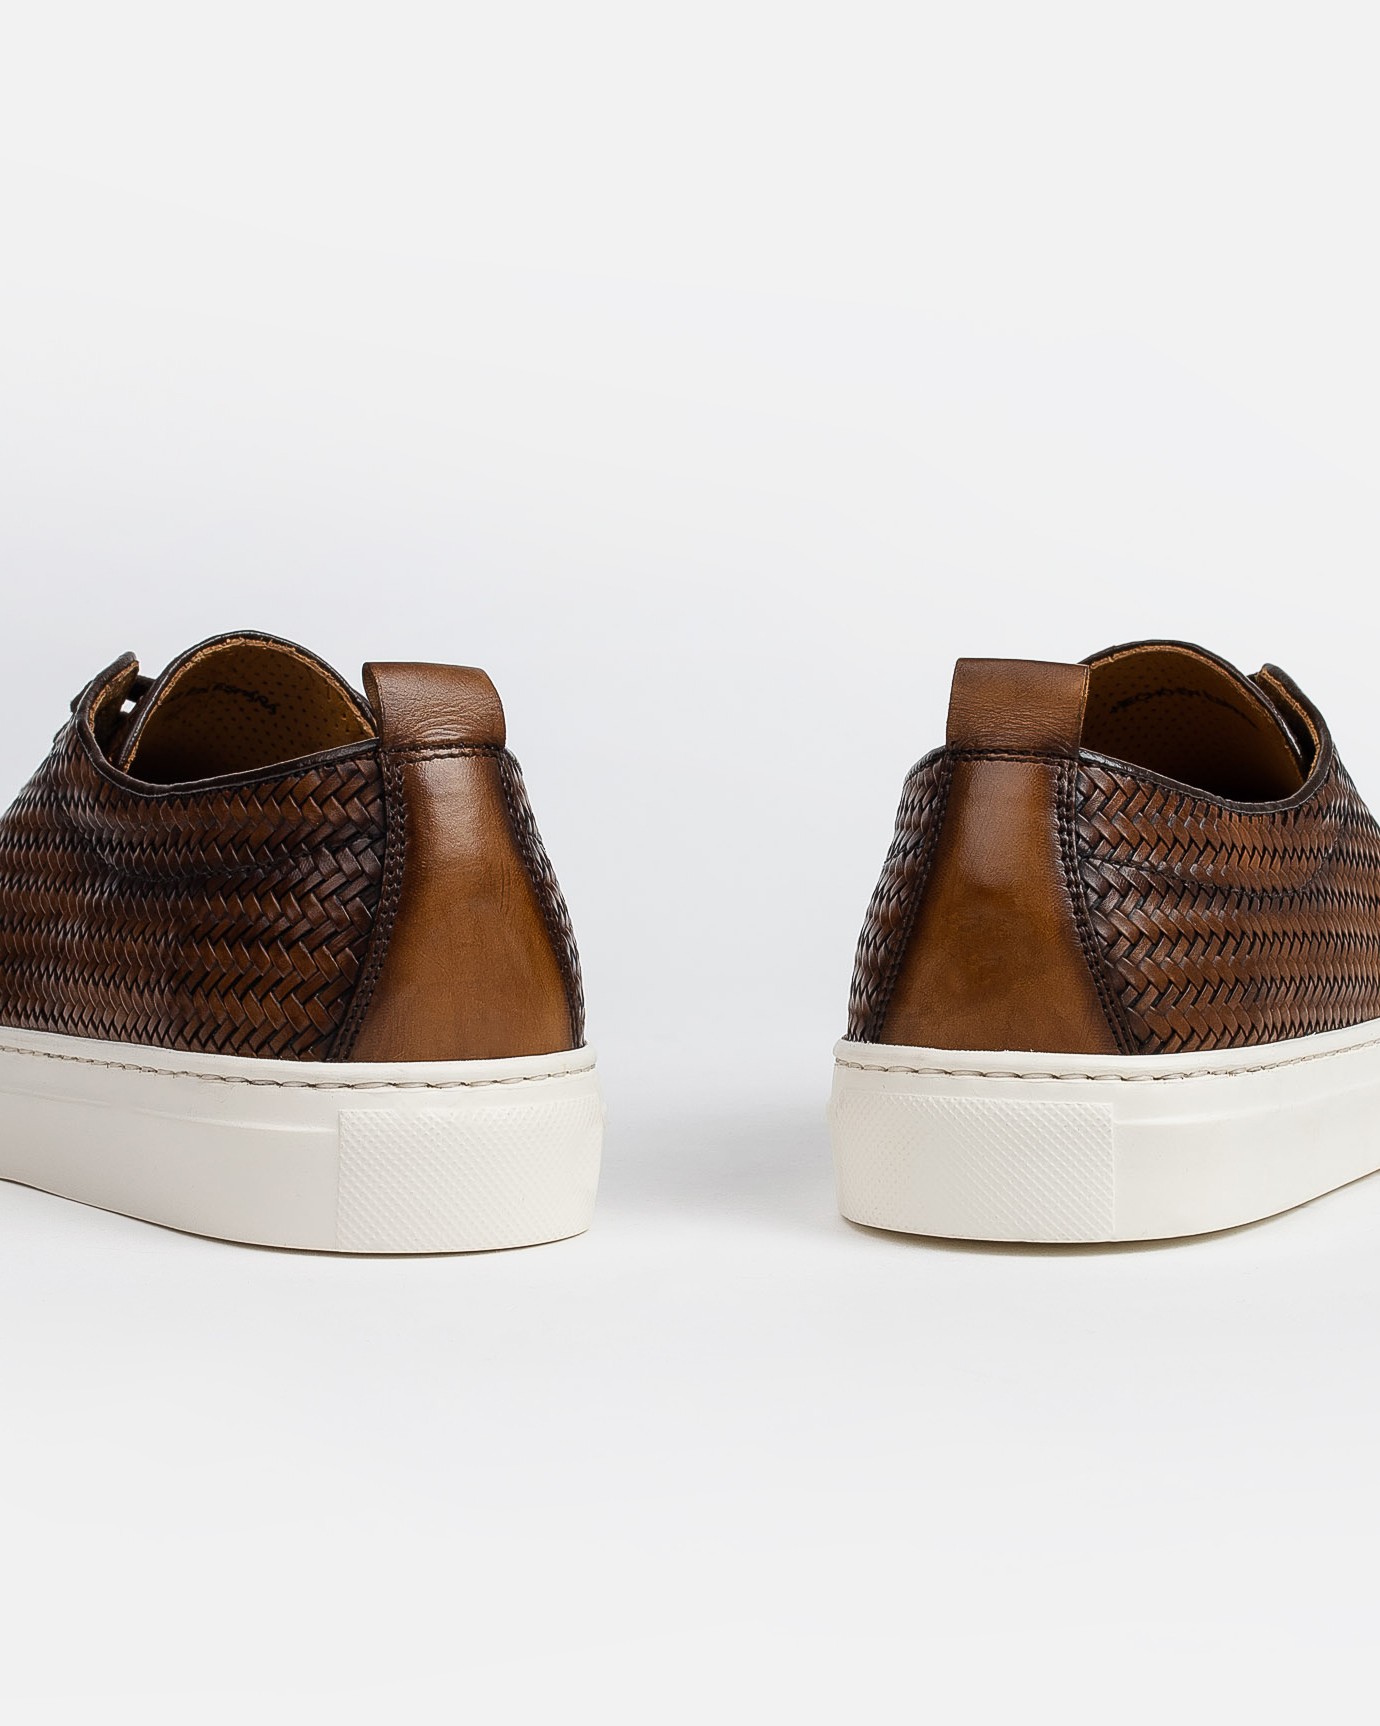 calce-zapatillas-magnum-gold-sneakers-brown-marron (6)